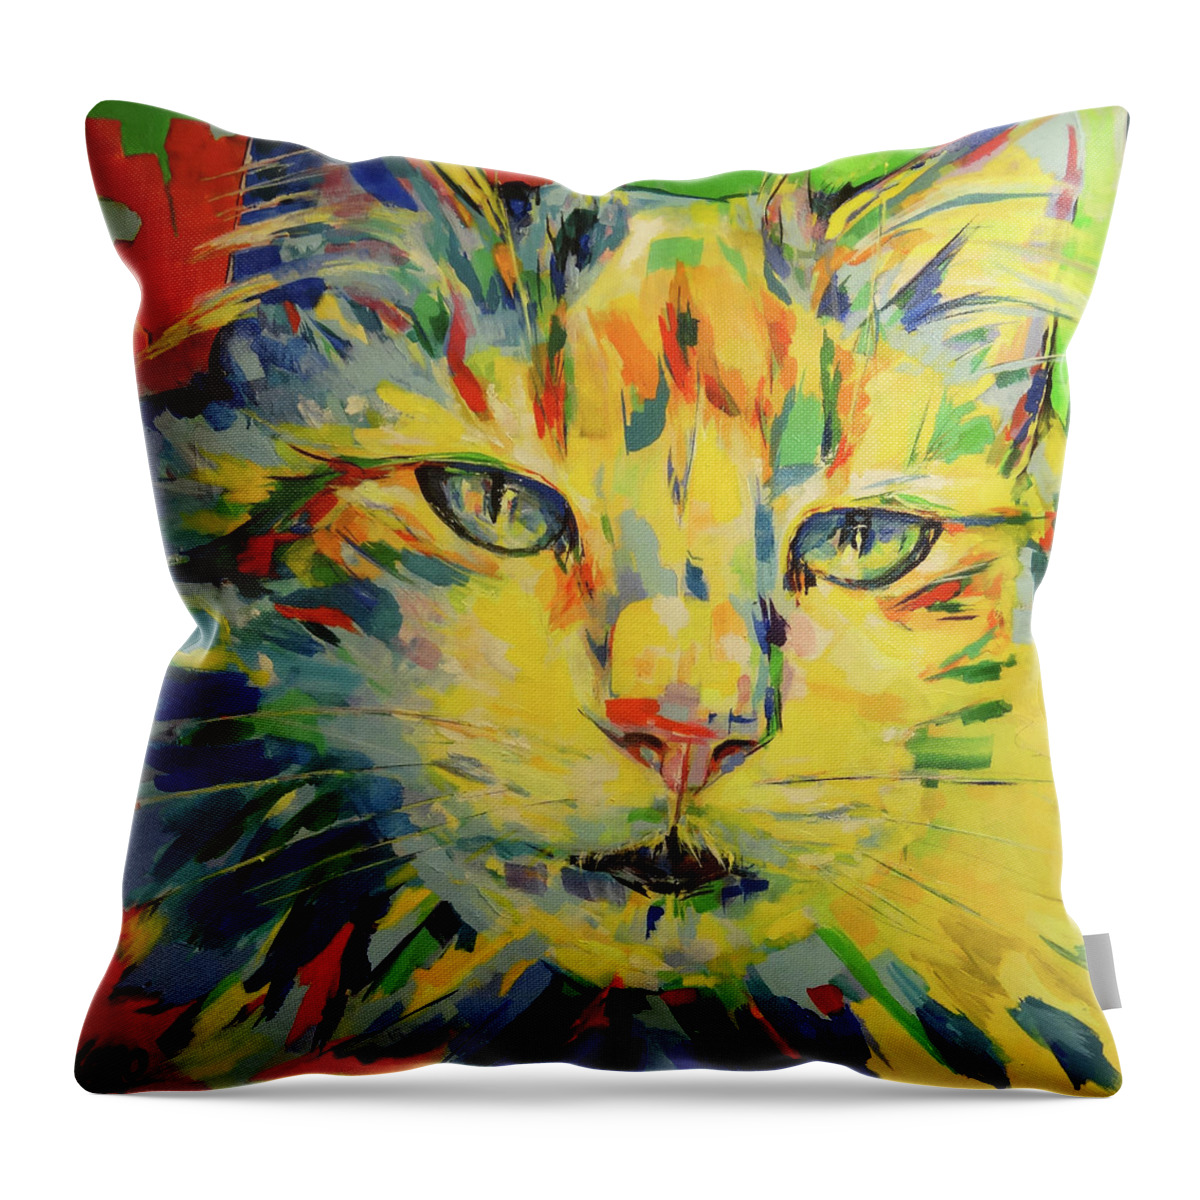 Cat Throw Pillow featuring the painting Minina by Koro Arandia